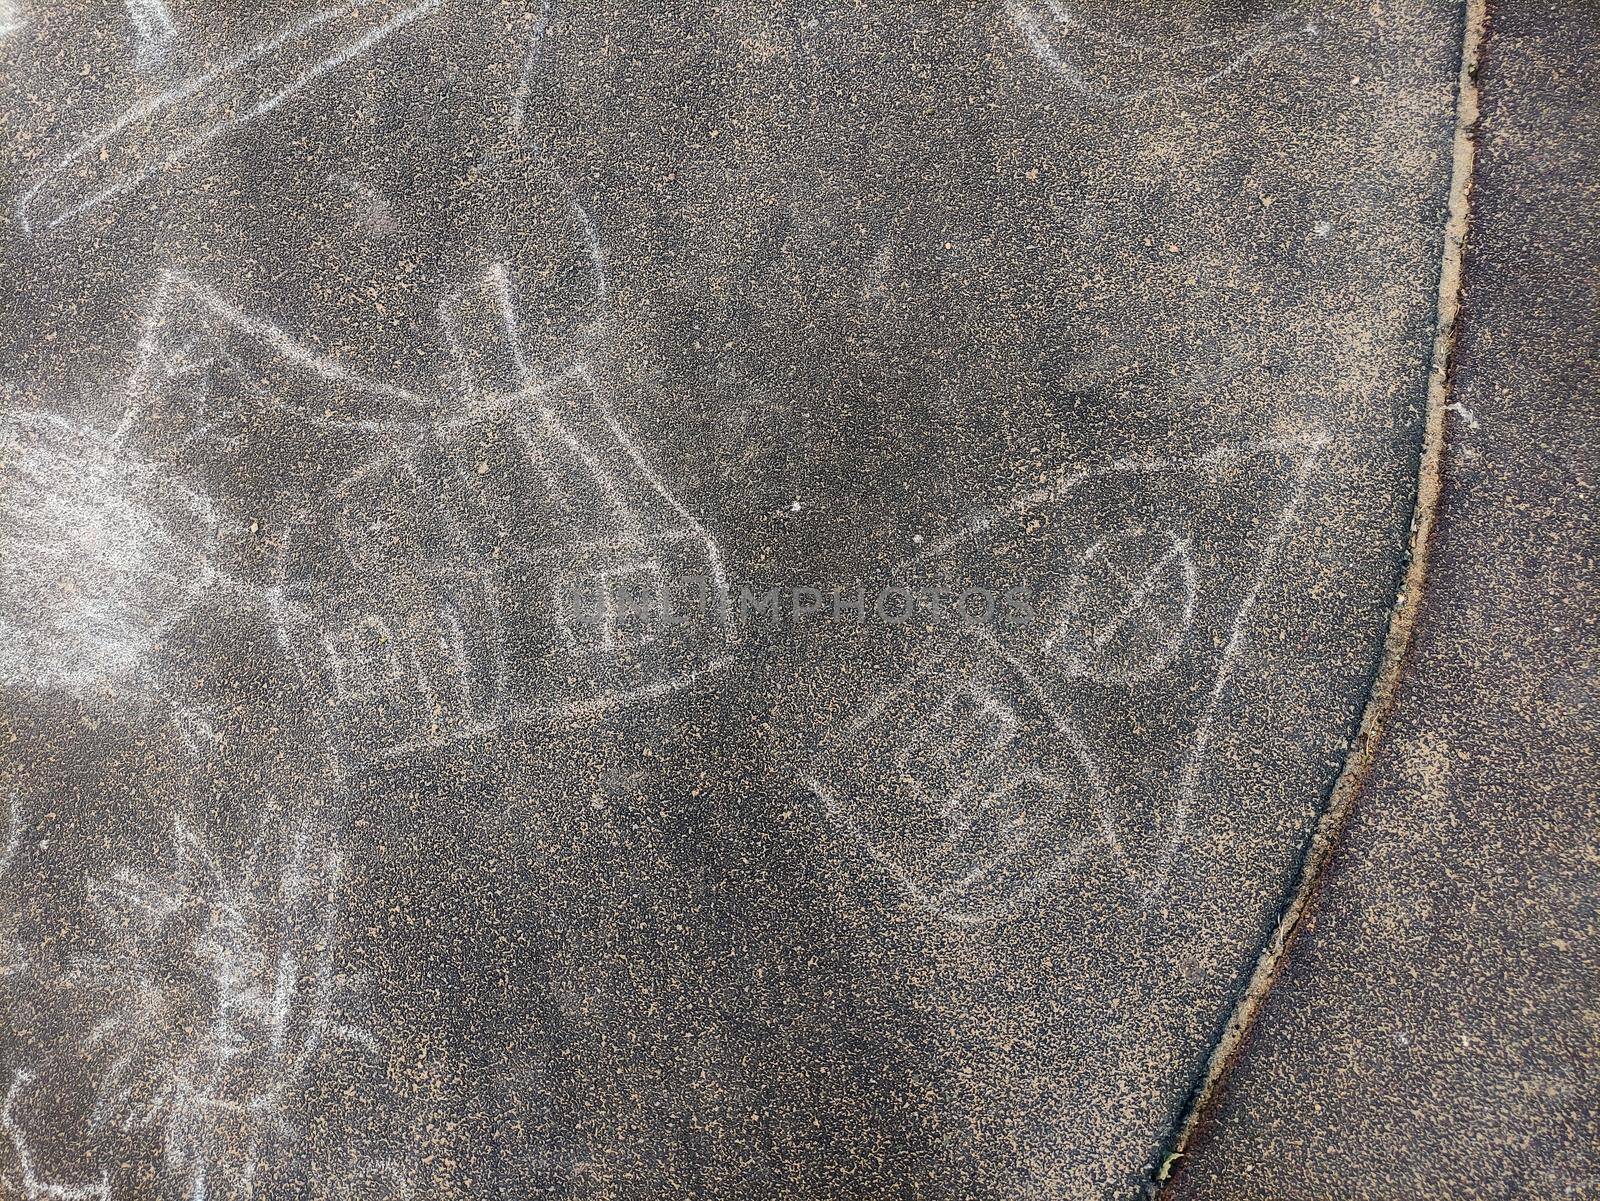 Chalk drawing on asphalt. Kids and children playground activity. Happy world concept. by iliris